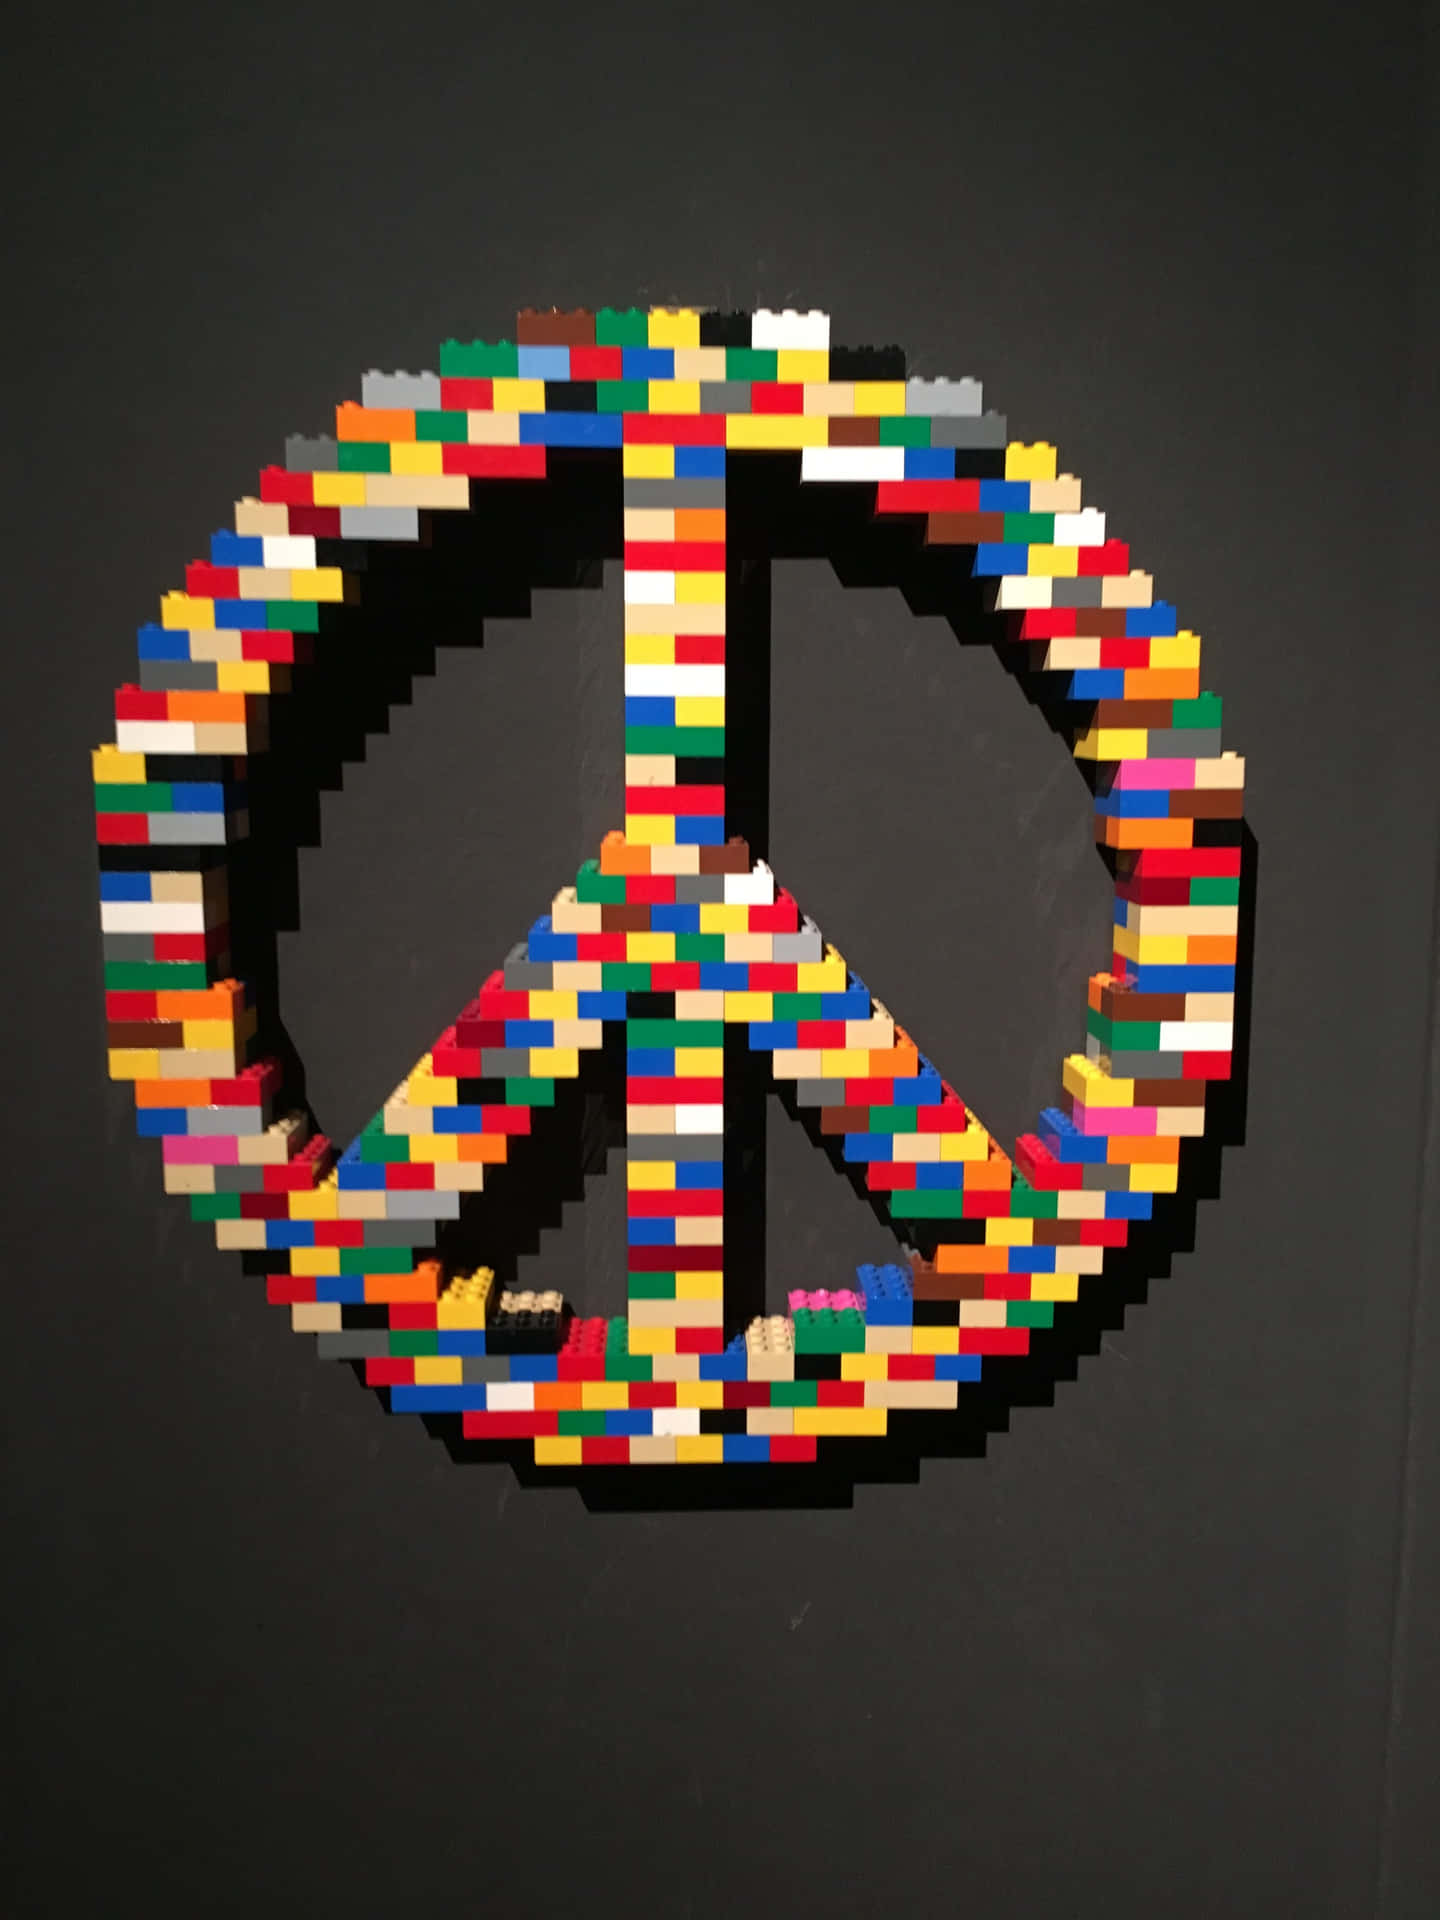 "Create Amazing Pieces of Art with Blocks of LEGO!"